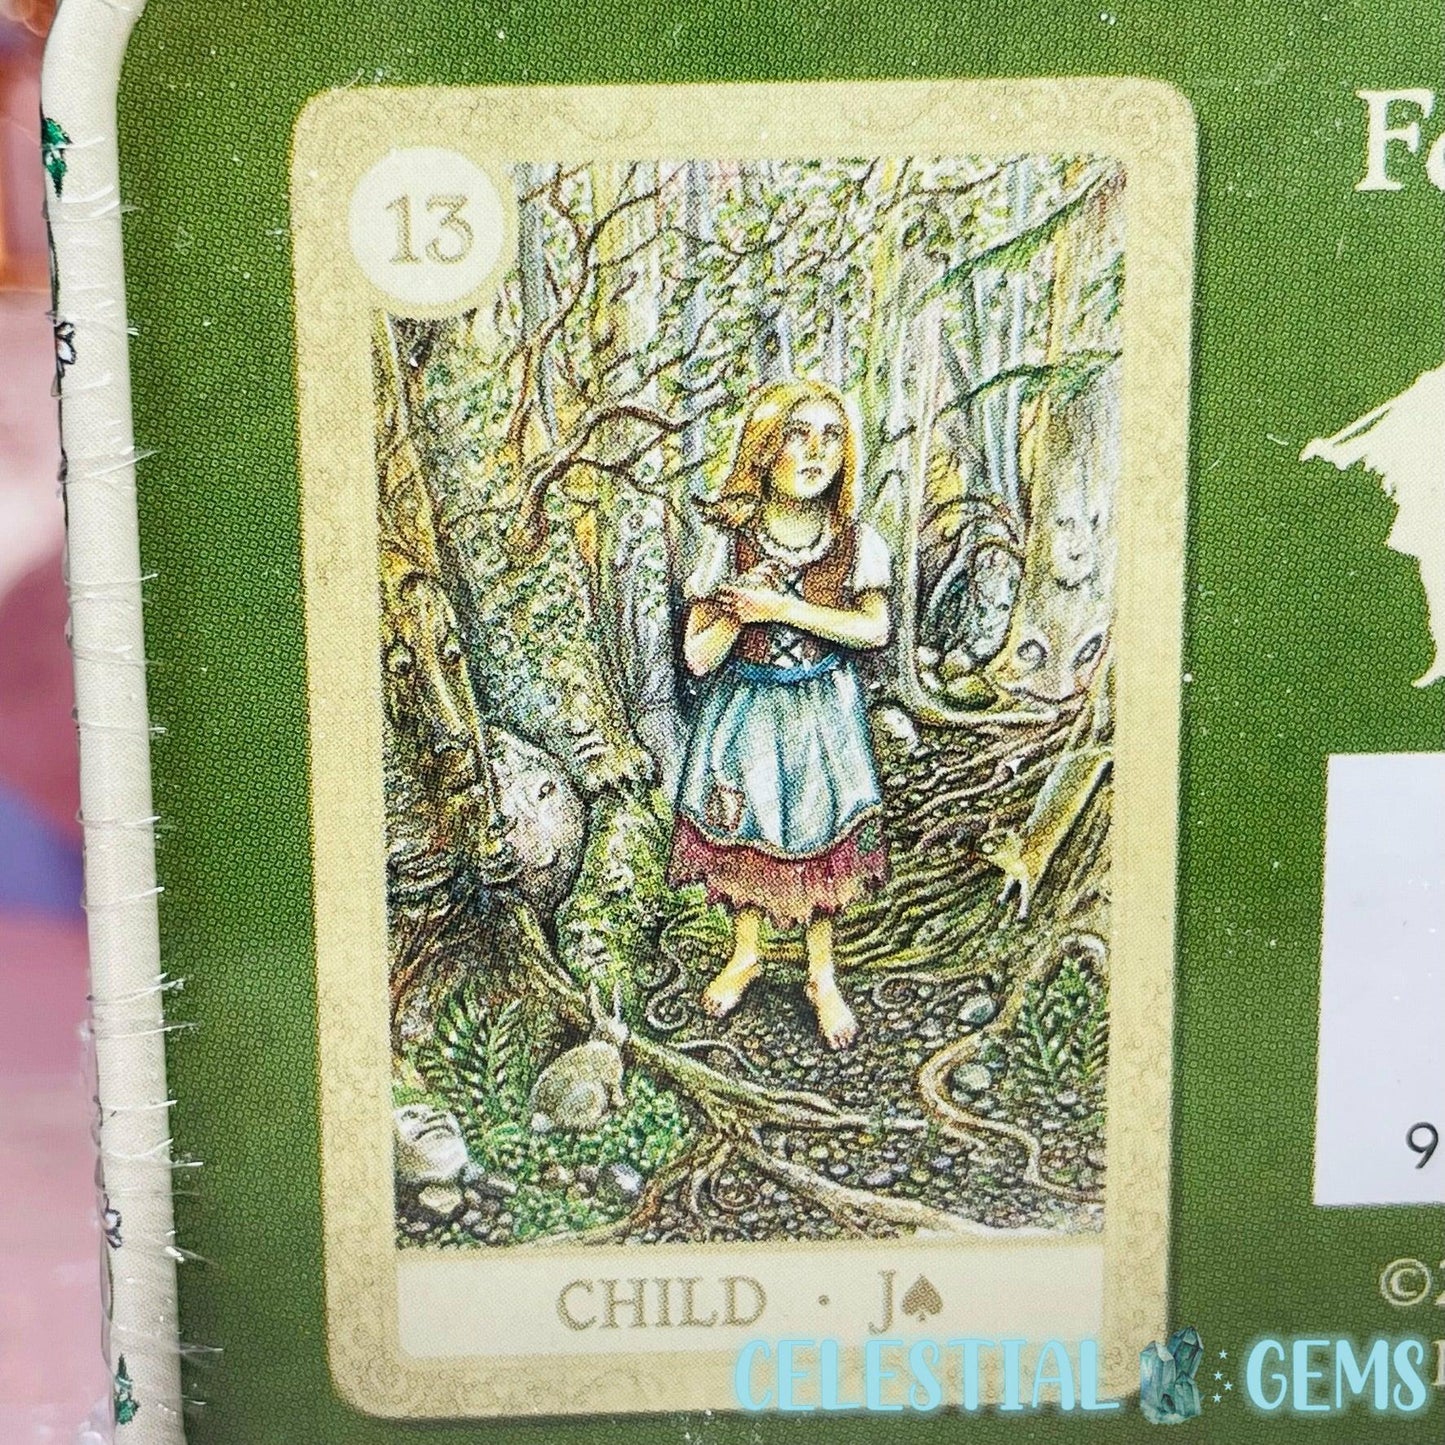 Fairy Tale Lenormand Tarot Card Deck in a Tin by Arwen Lynch